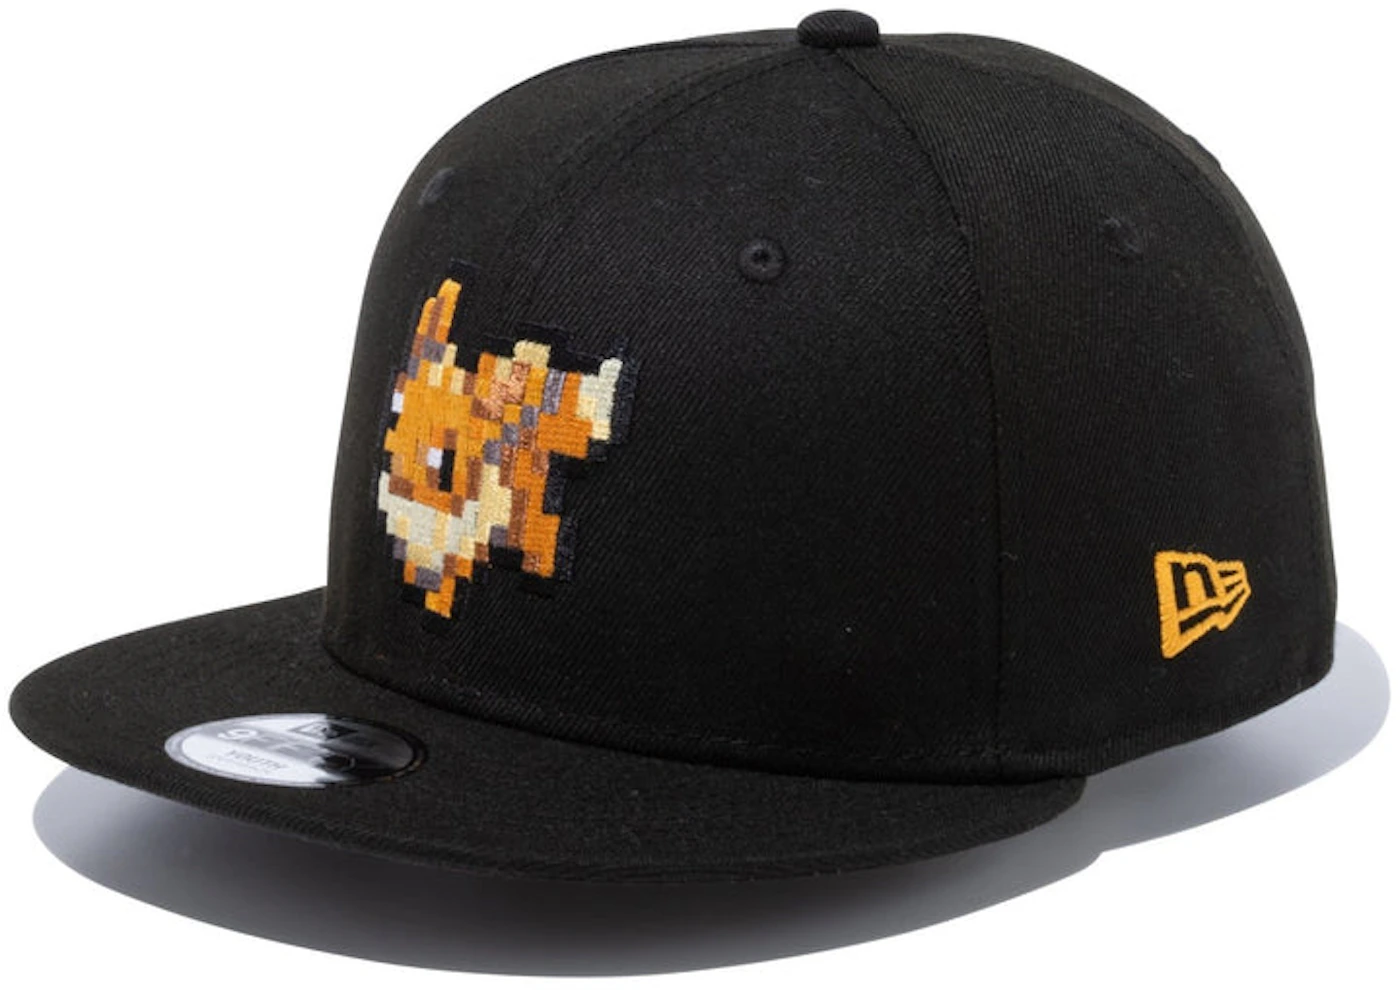 YSUG Funky Beats - Reversible bucket hat – Yo Soy Un Gamer